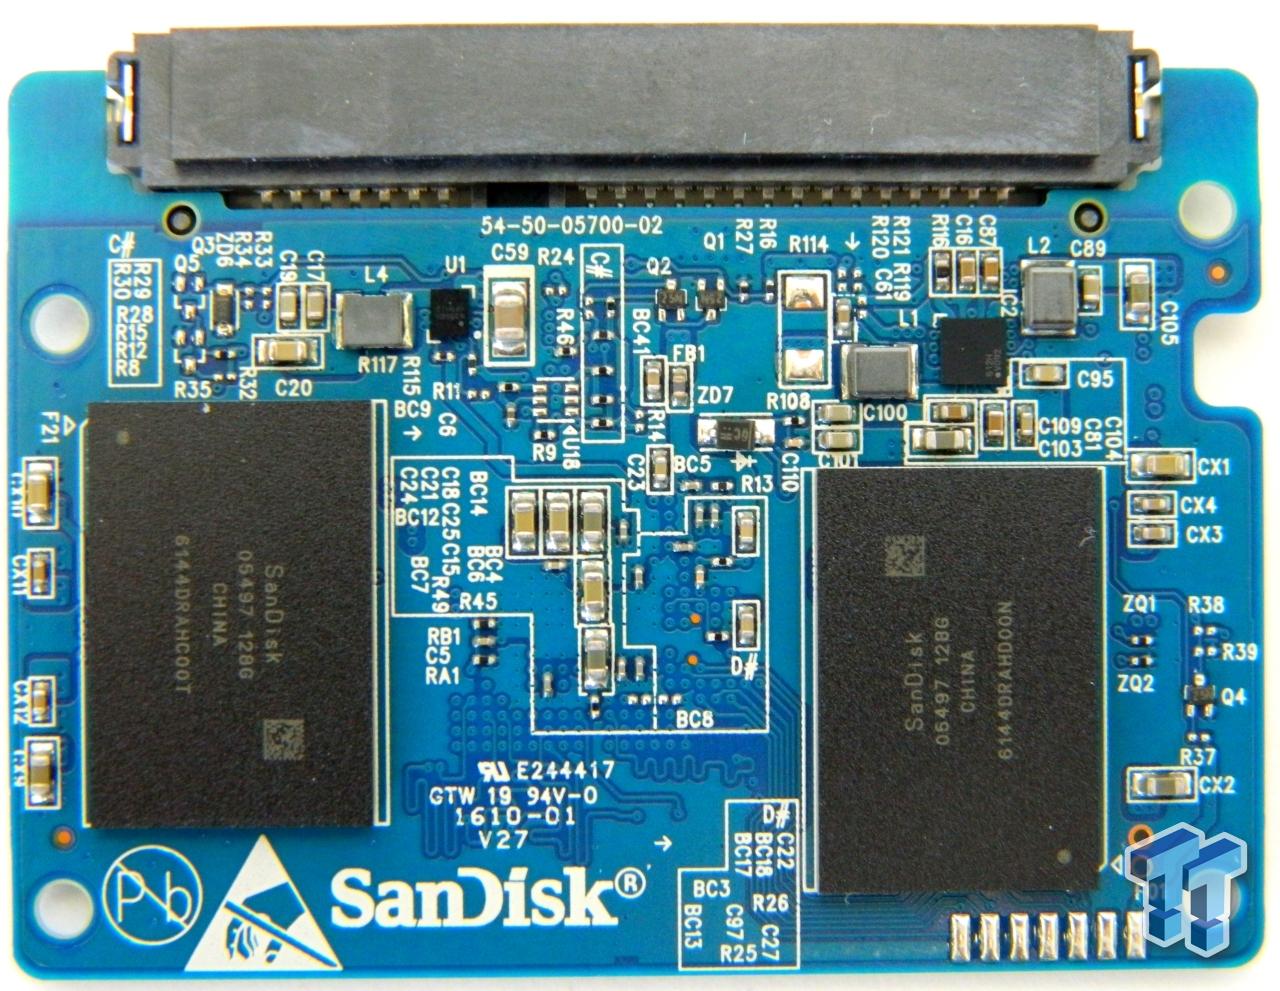 strejke solid købmand SanDisk SSD Plus and Z410 SATA III SSD Review